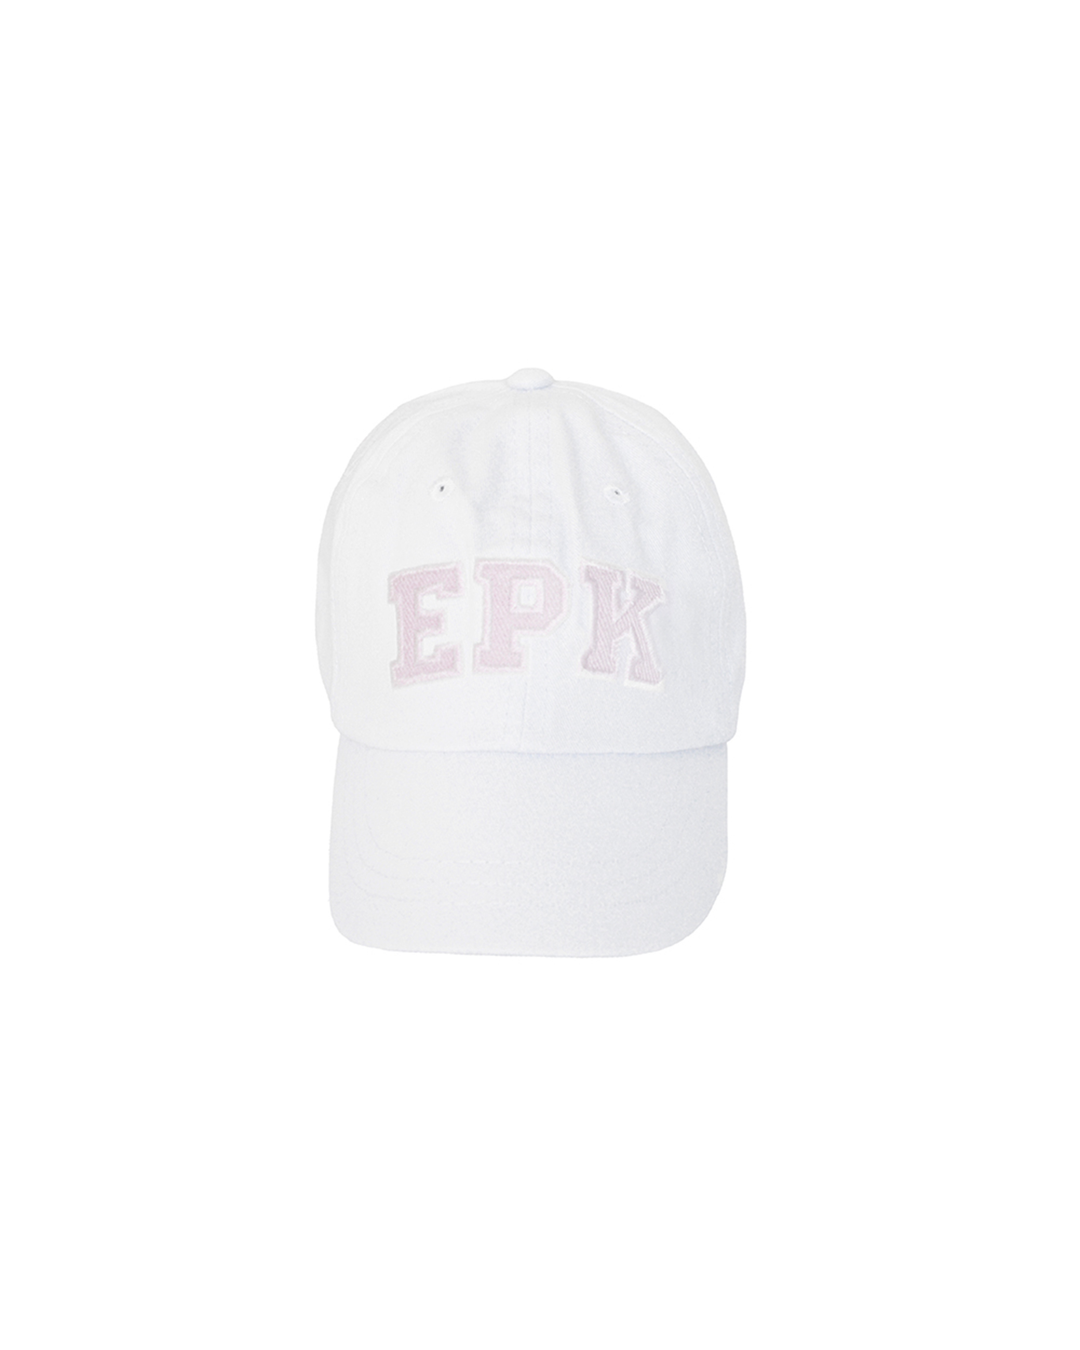 Gorra blanca con EPK rosado